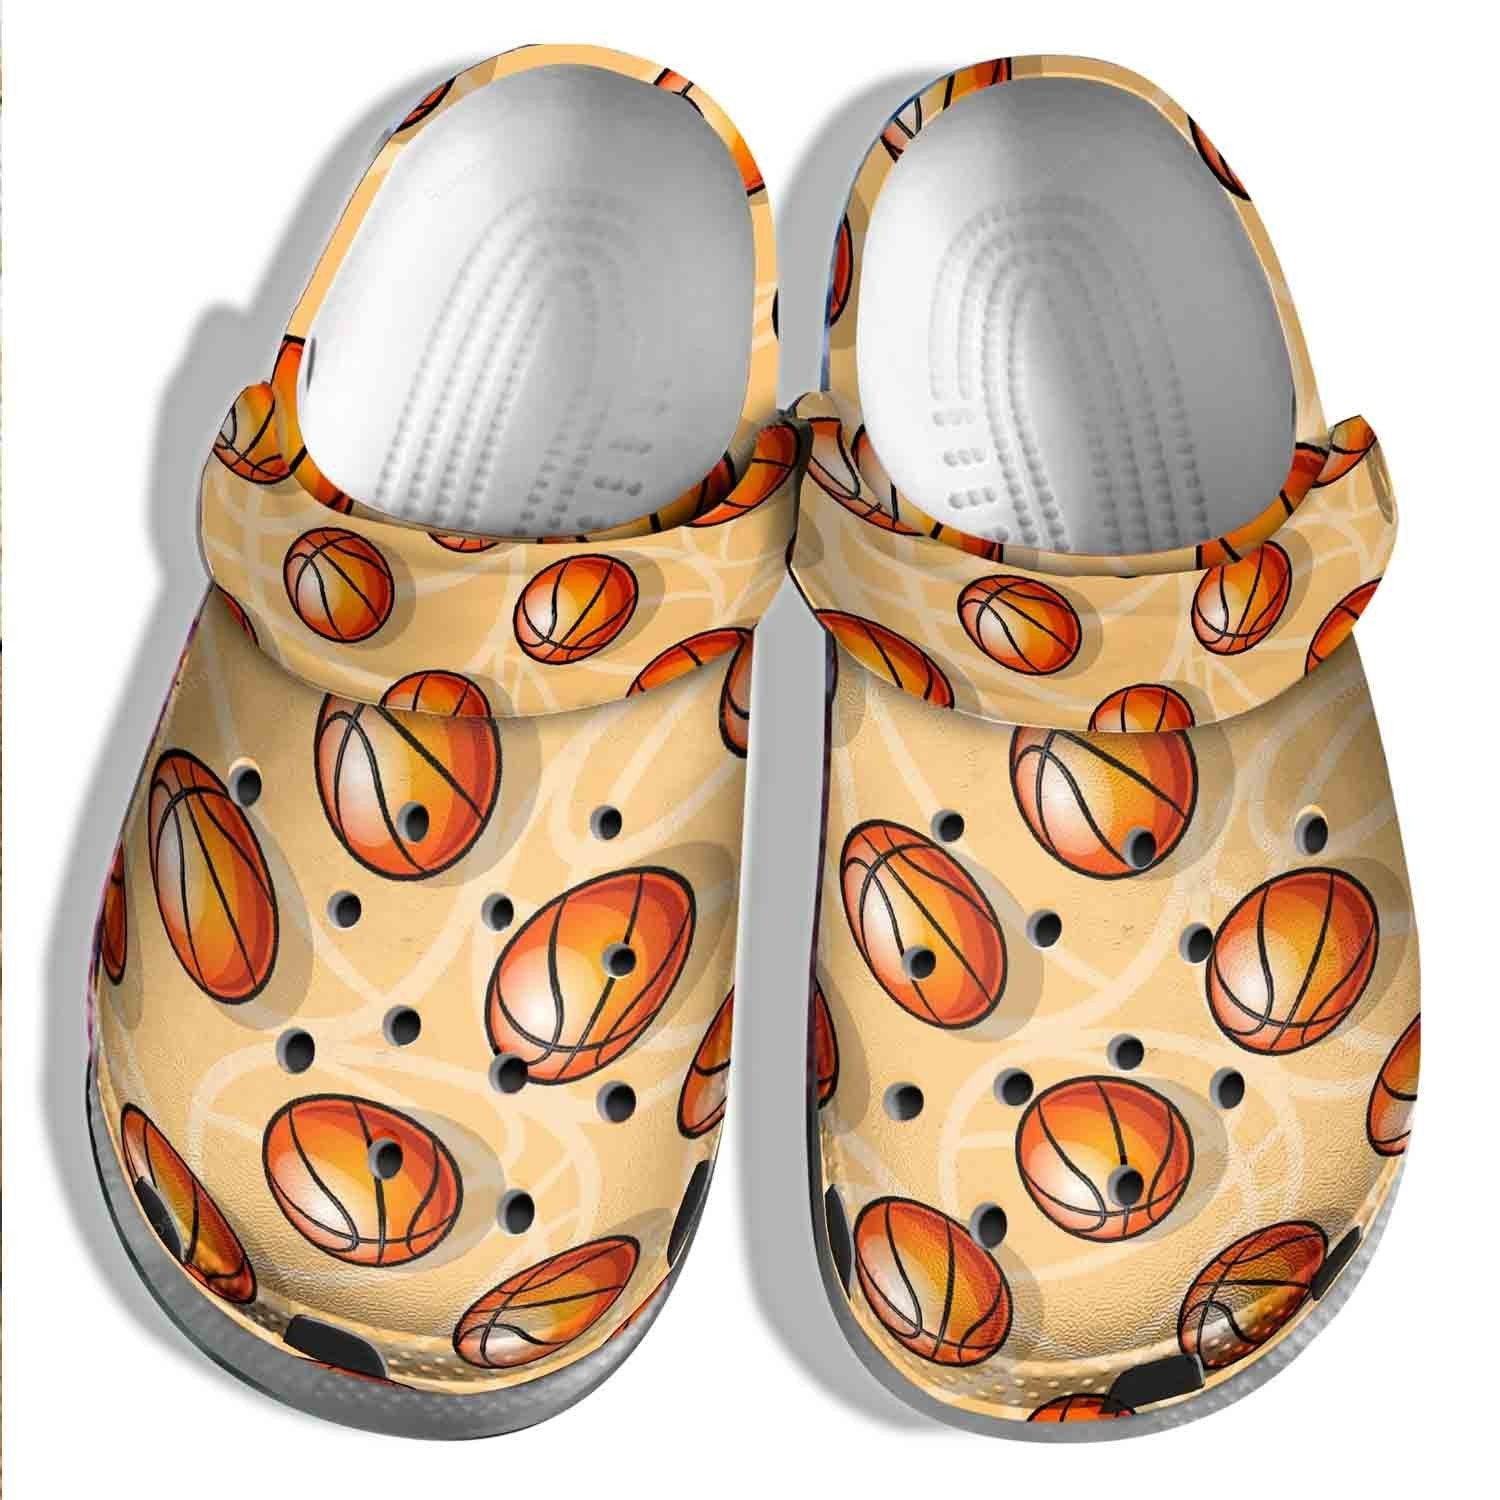 Basketball Funny Ball Crocs Shoes Clogs - Orange Basketball Outdoor Crocs Shoes Clogs For Men Women